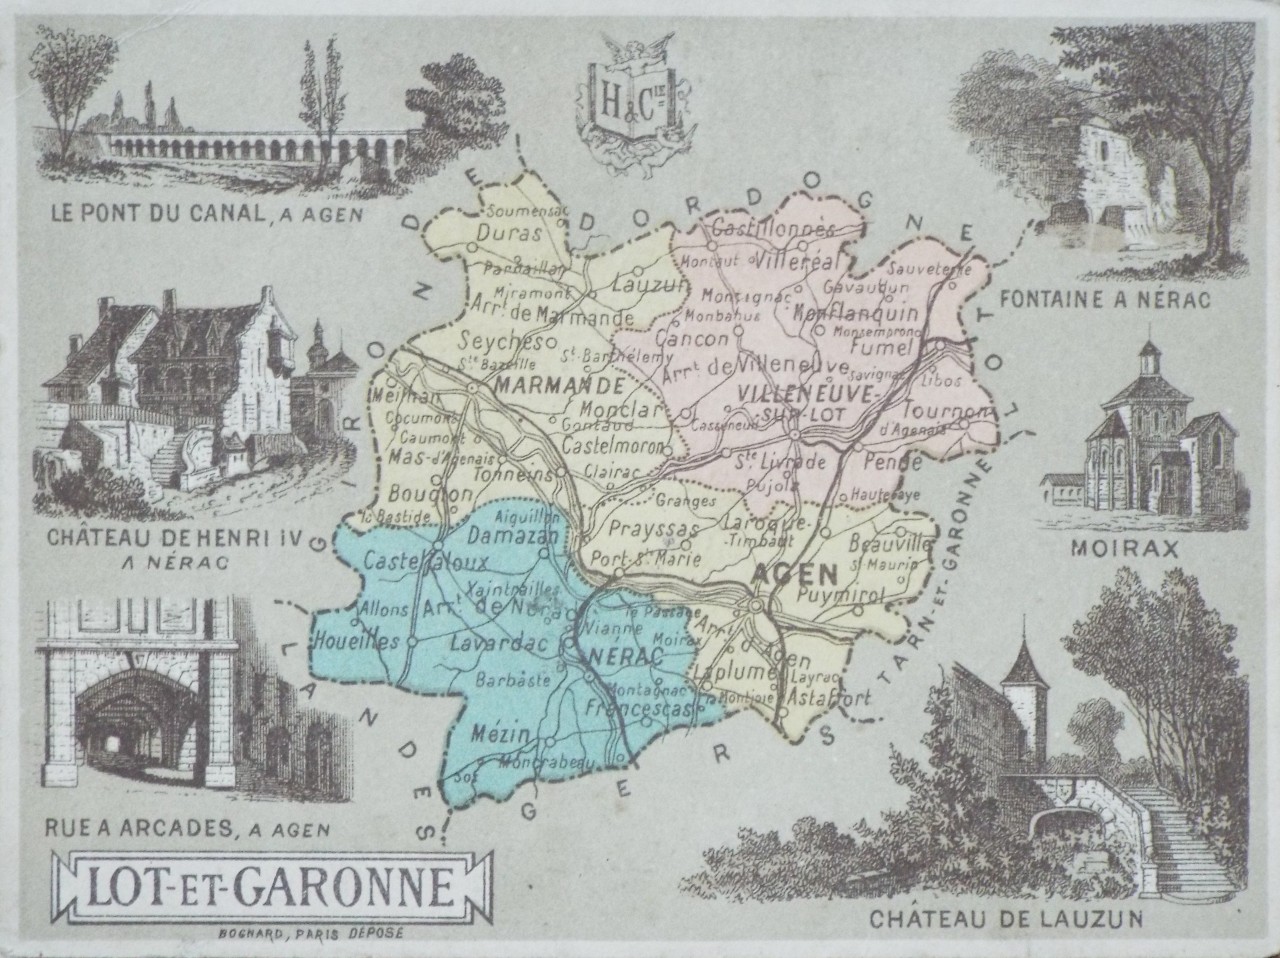 Map of Lot et Garonne